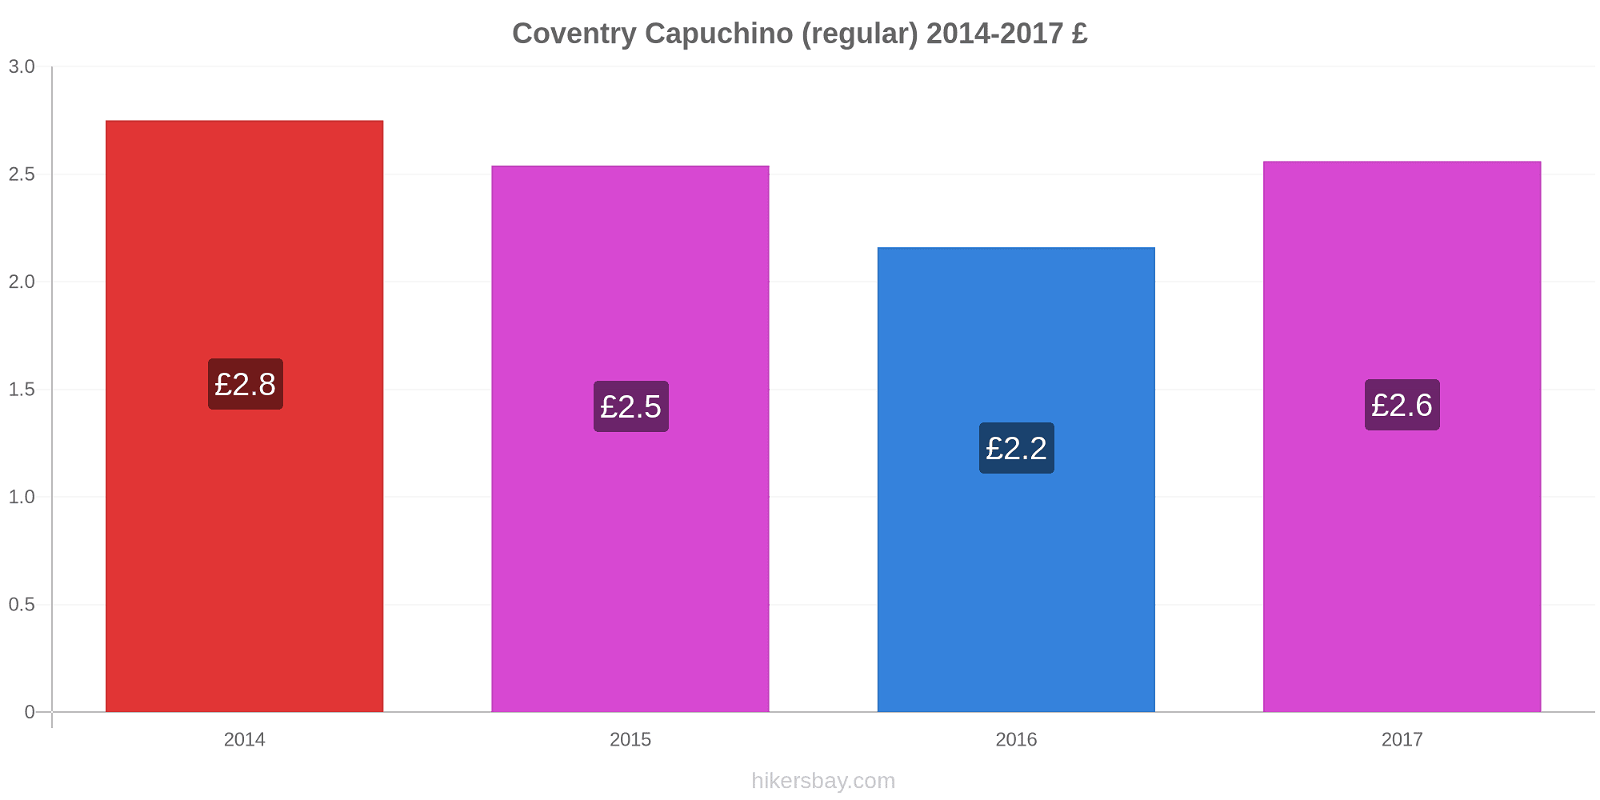 Coventry cambios de precios Capuchino (regular) hikersbay.com